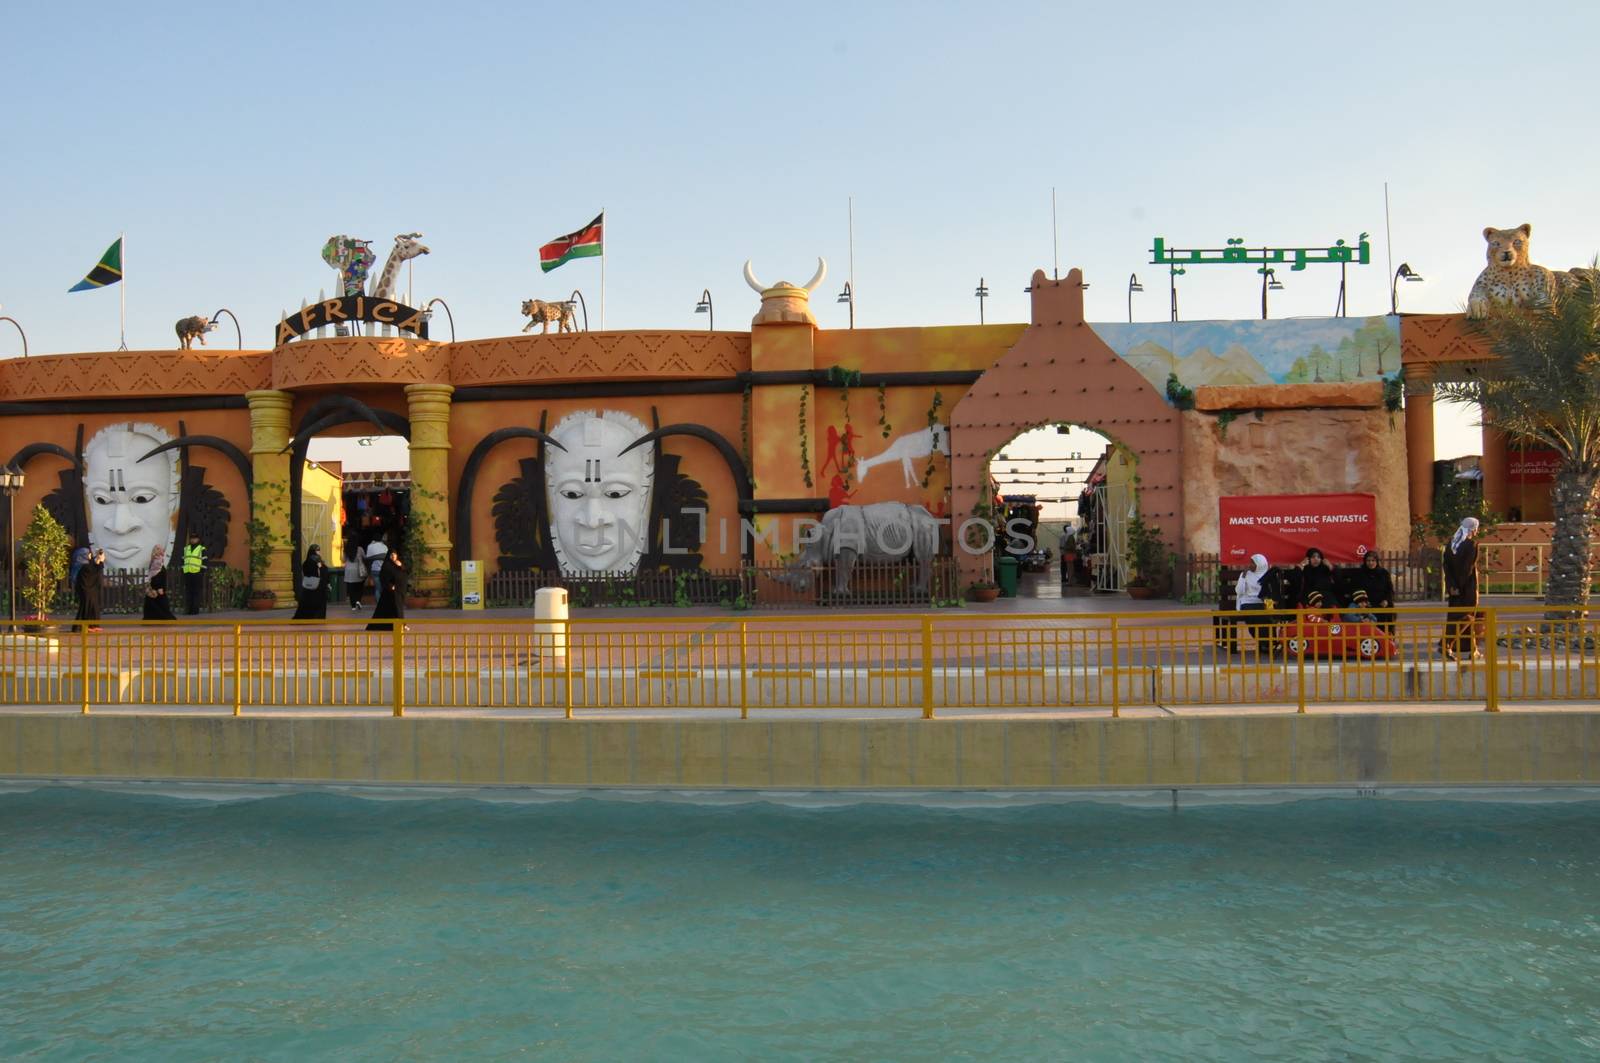 Africa pavilion at Global Village in Dubai, UAE by sainaniritu